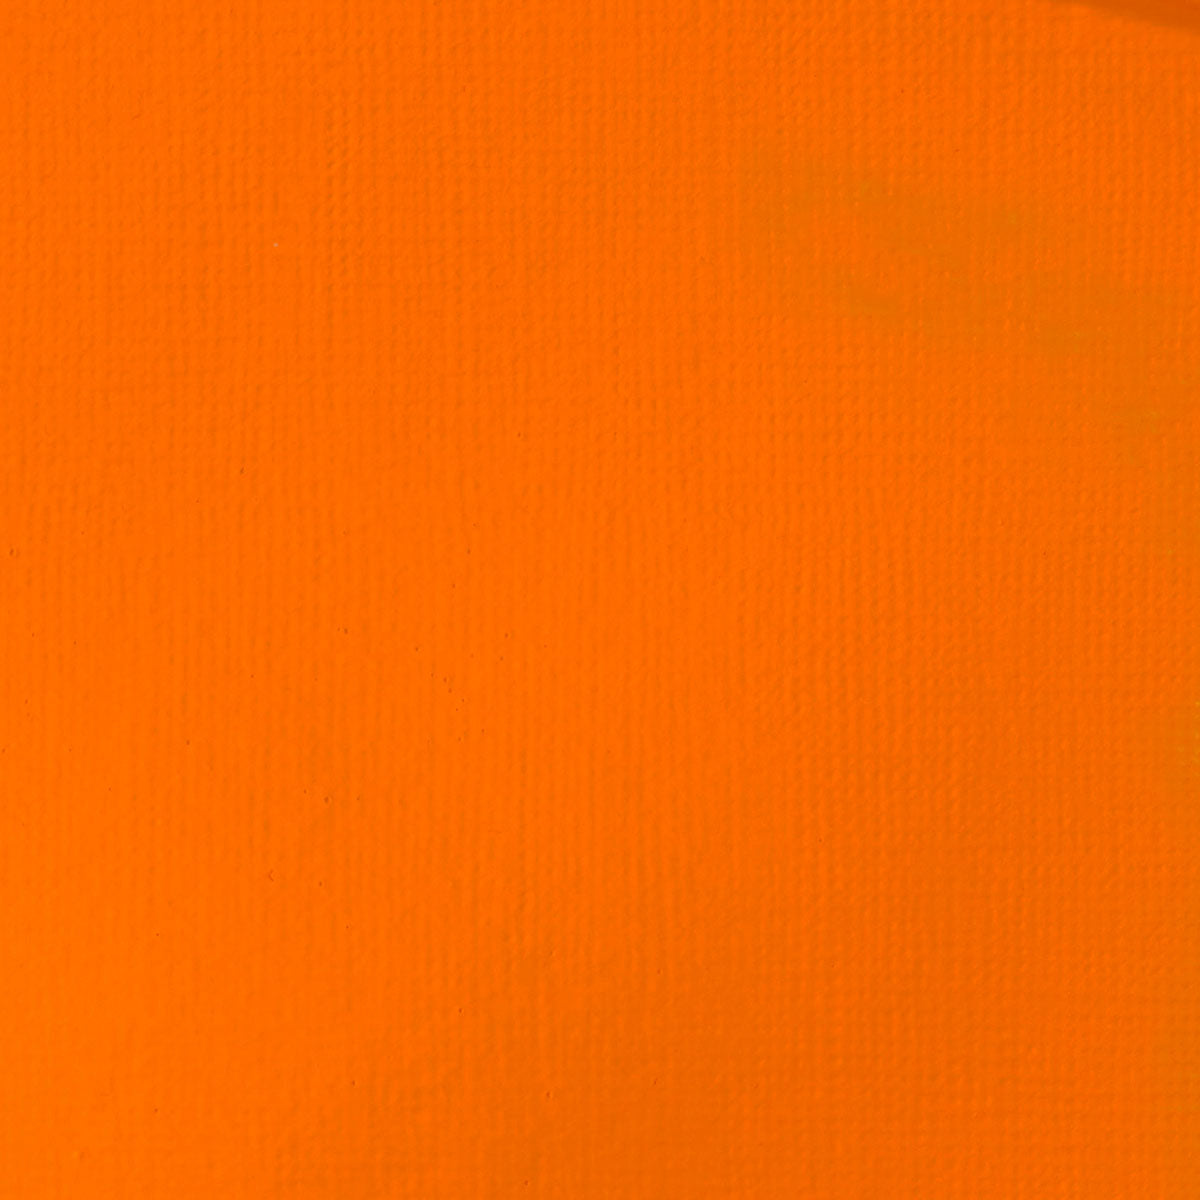 Liquitex - Acrylic Gouache 59ml S2 - Cadmium Free Orange